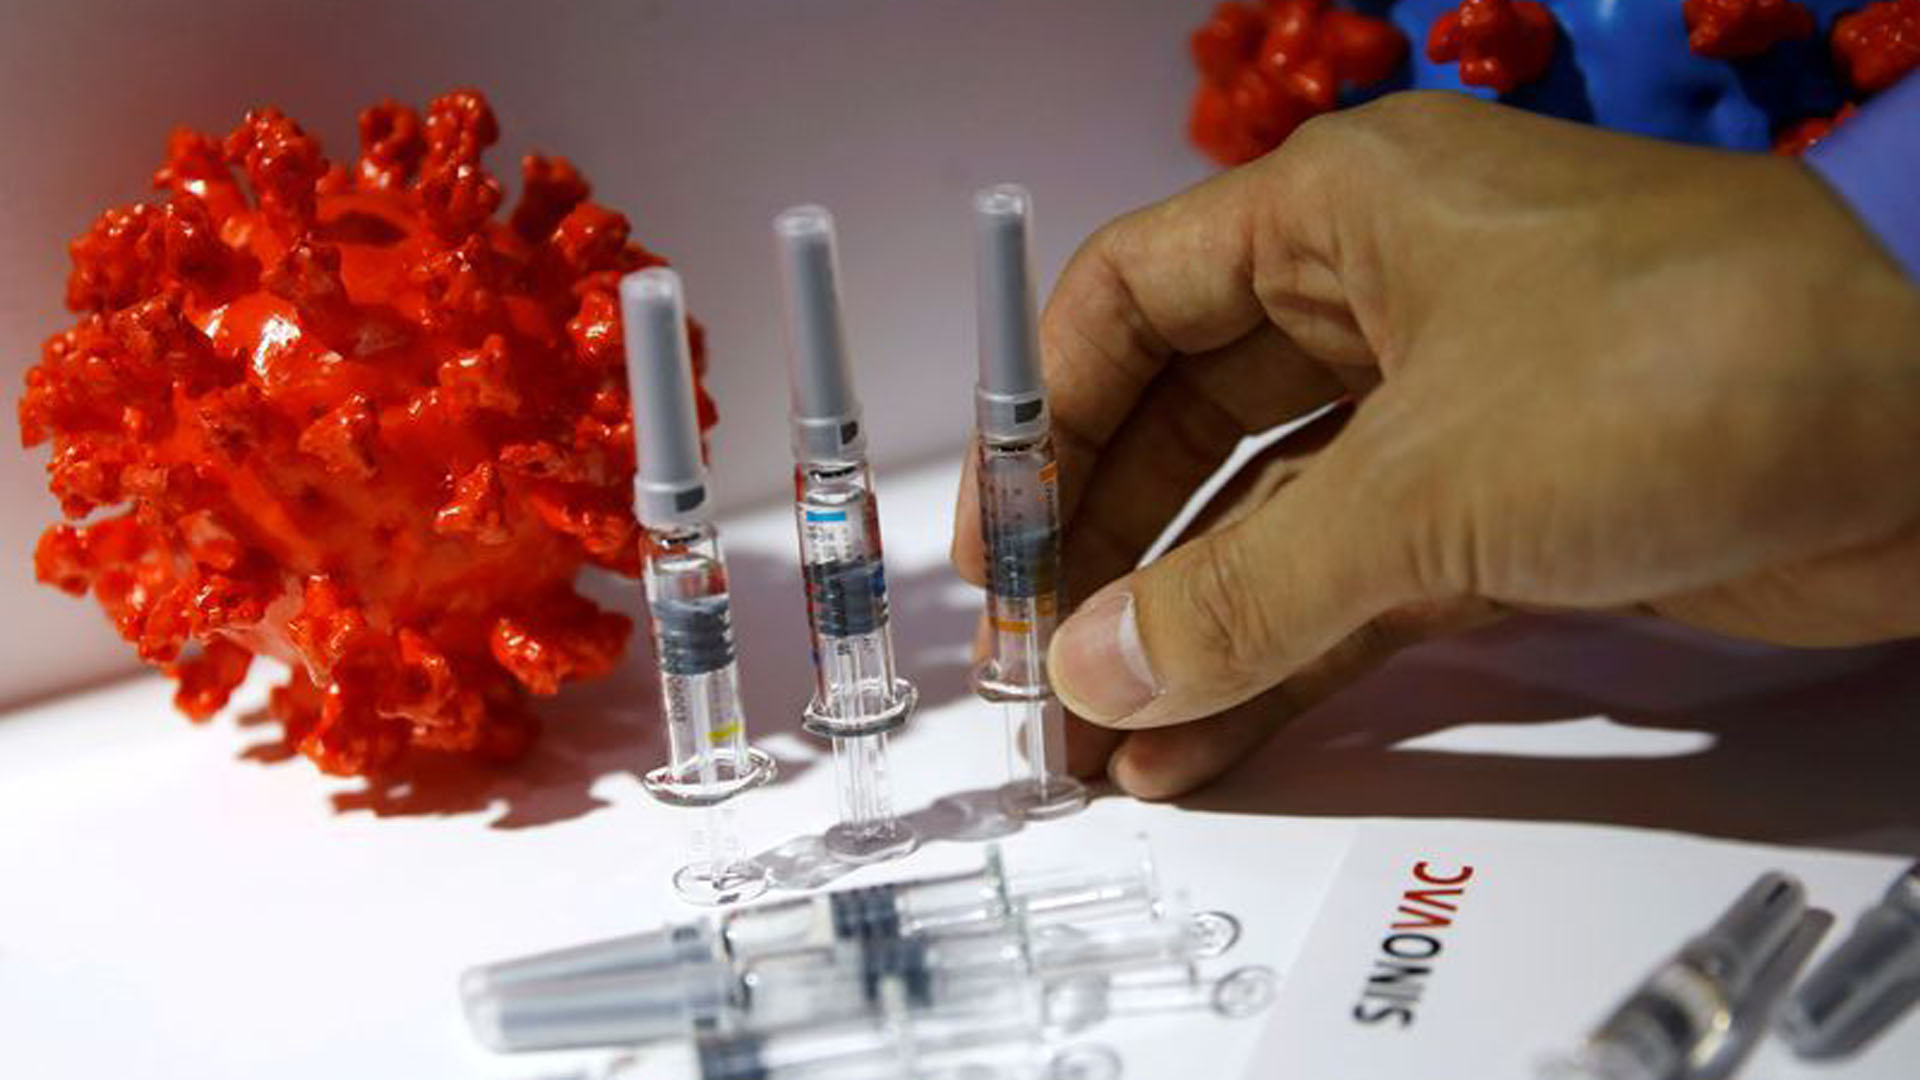 Frascos con candidatos a vacunas contra el coronavirus de Sinovac Biotech Ltd en stand en la Feria Internacional de Comercio de Servicios de China 2020 (CIFTIS), Pekín, China, 5 septiembre 2020.
REUTERS/Tingshu Wang